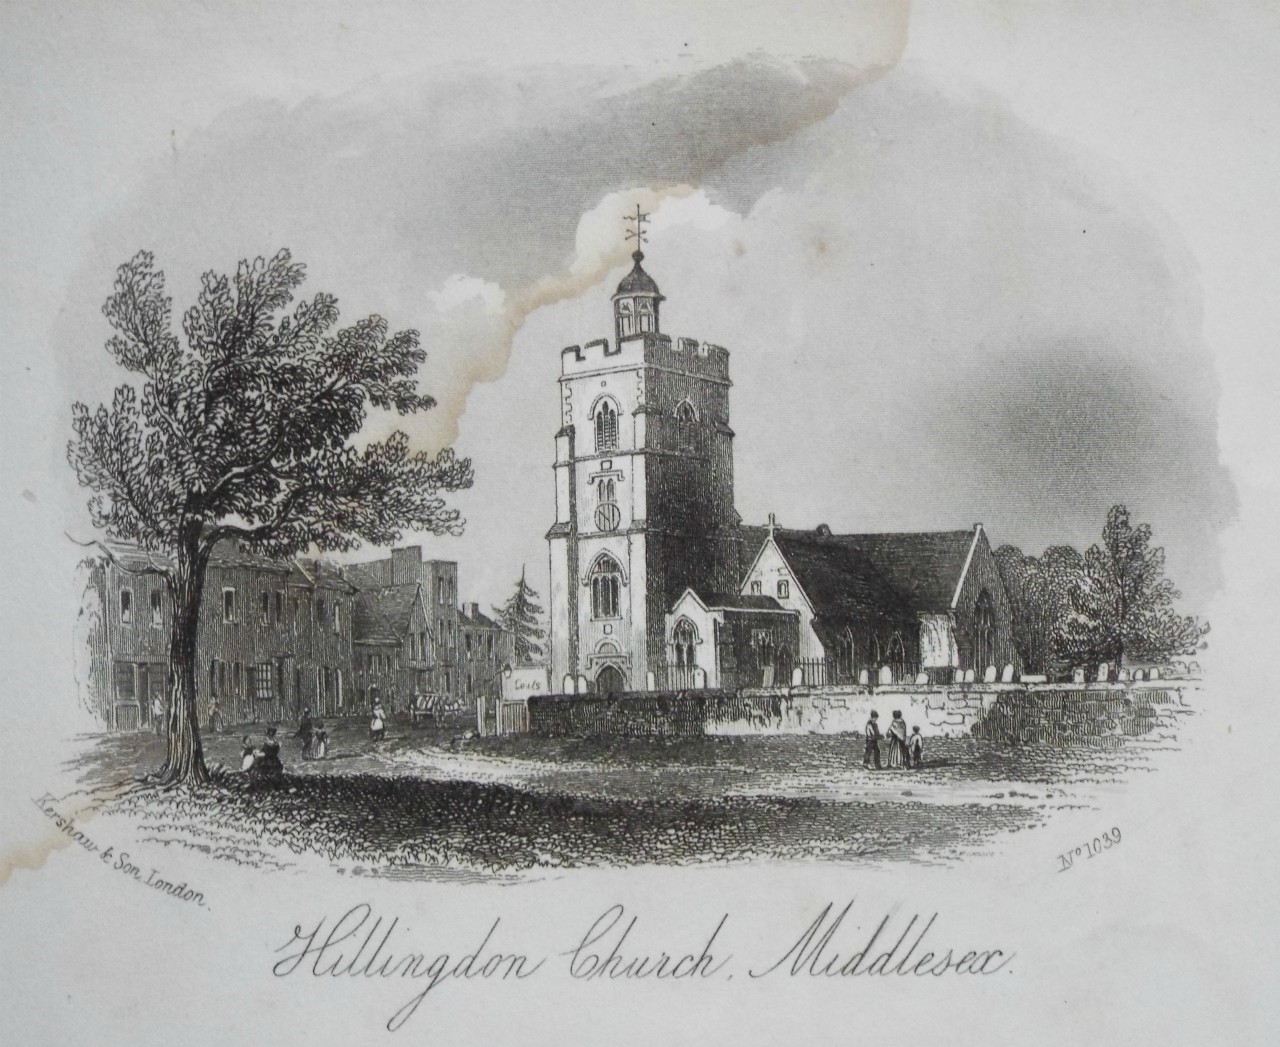 Steel Vignette - Hillingdon Church, Middlesex. - Kershaw